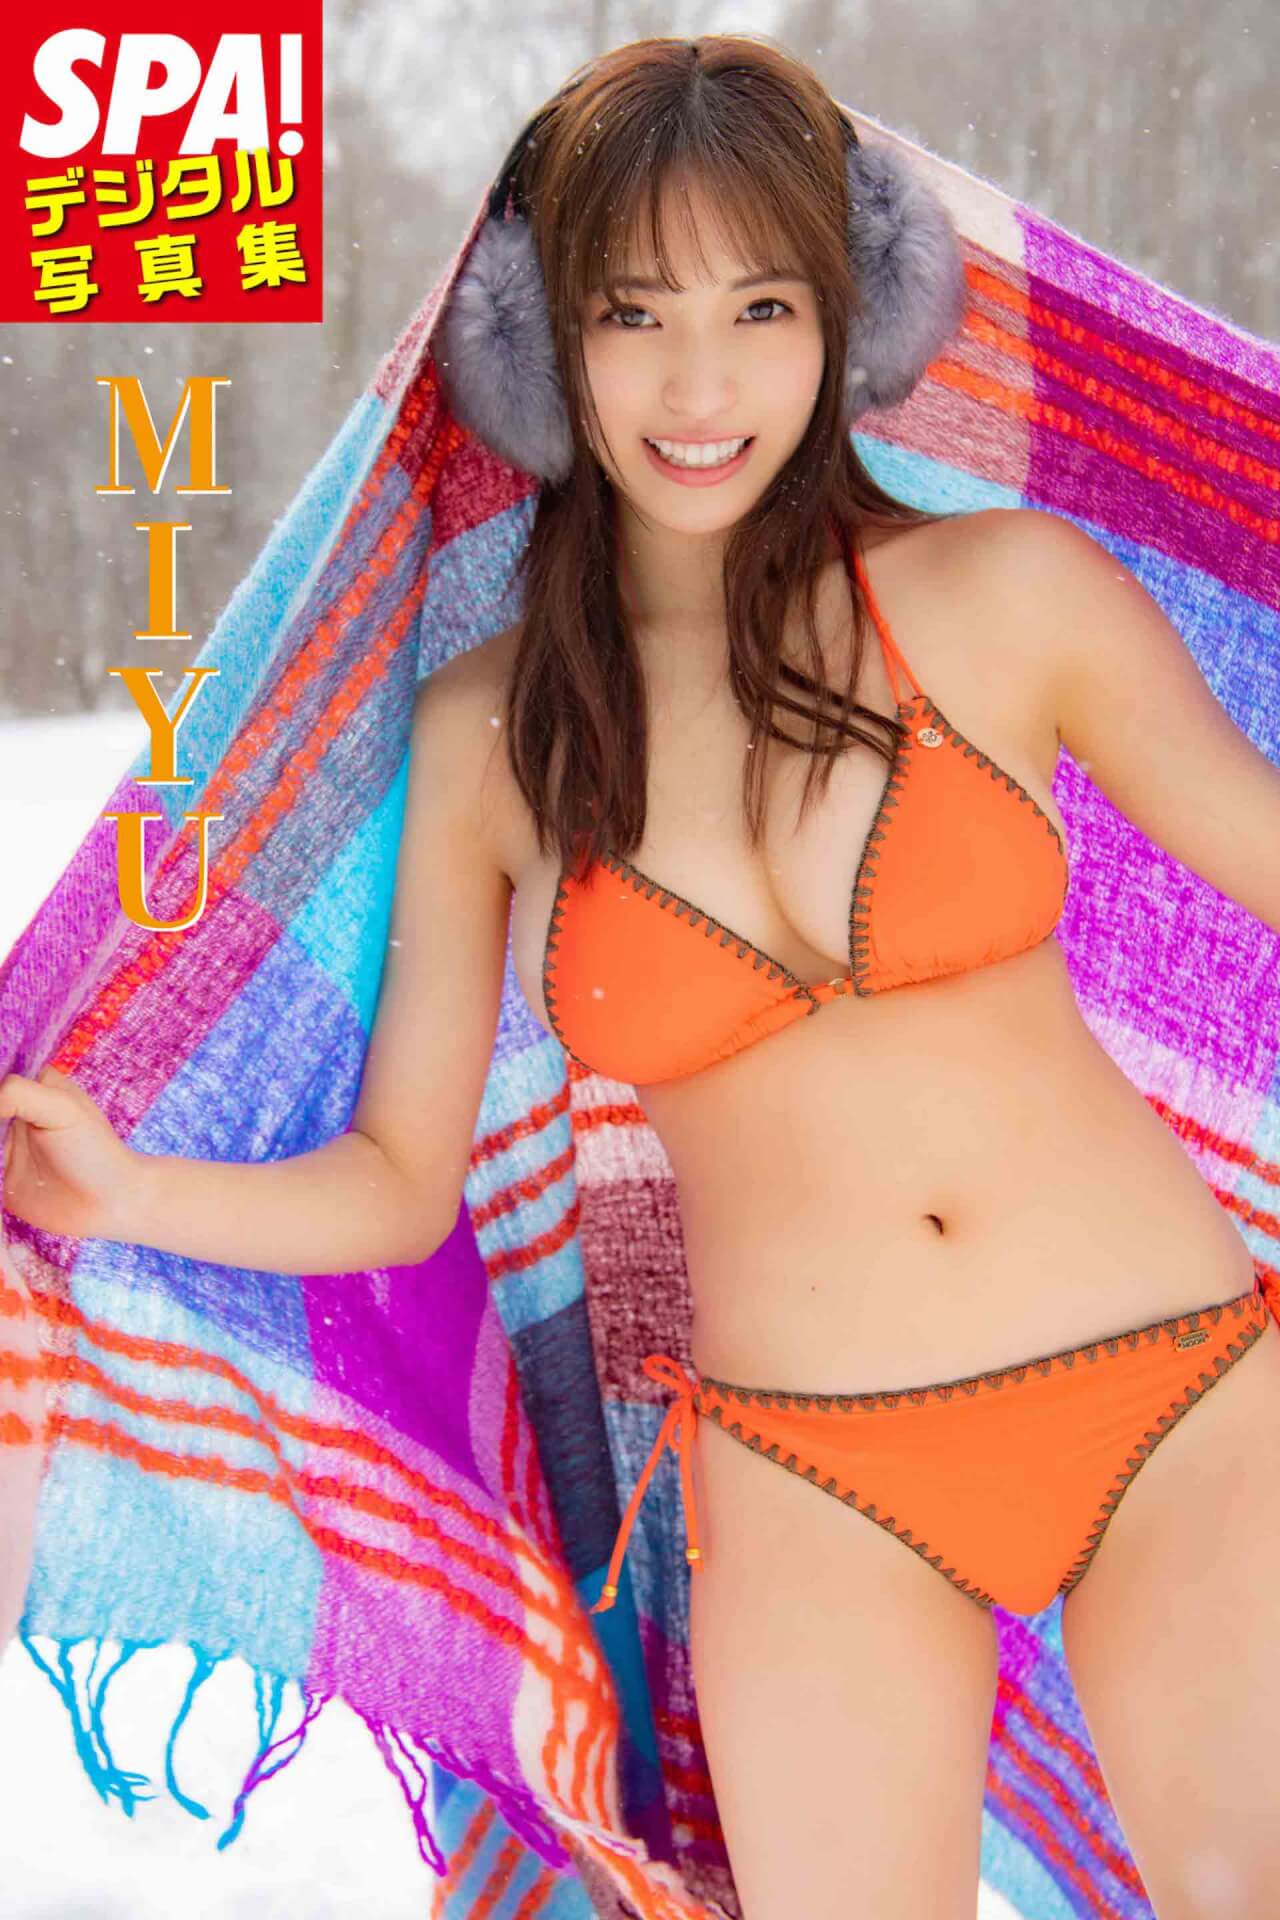 Miyuが雪山グラビアでパーフェクトボディを披露 最新デジタル写真集 Spa デジタル写真集 Miyu が発売 Qetic